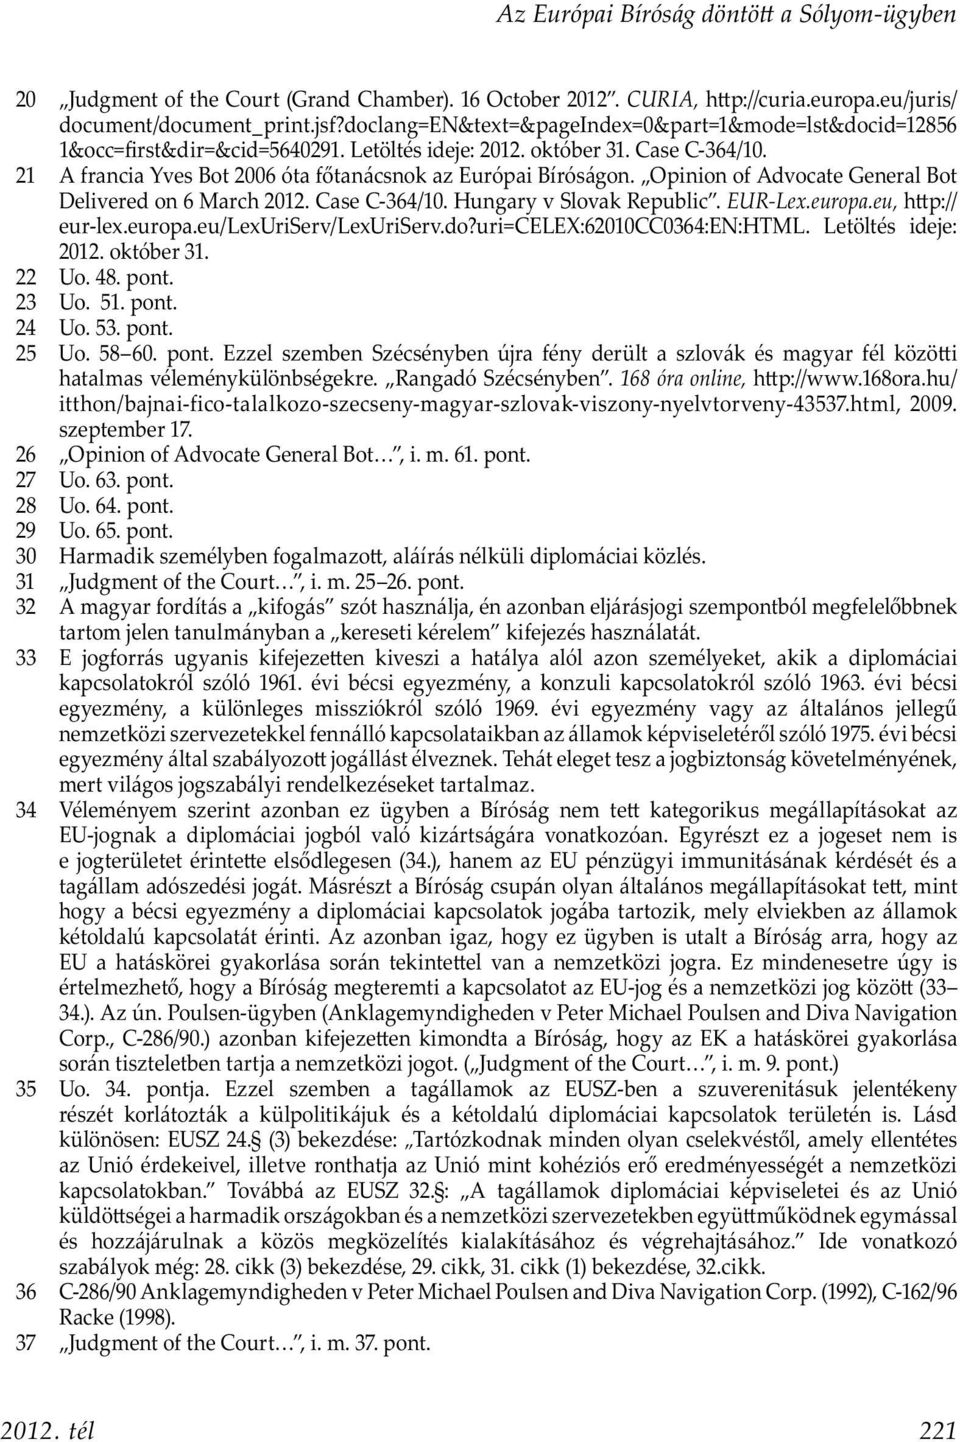 Opinion of Advocate General Bot Delivered on 6 March 2012. Case C-364/10. Hungary v Slovak Republic. EUR-Lex.europa.eu, h p:// eur-lex.europa.eu/lexuriserv/lexuriserv.do?uri=celex:62010cc0364:en:html.